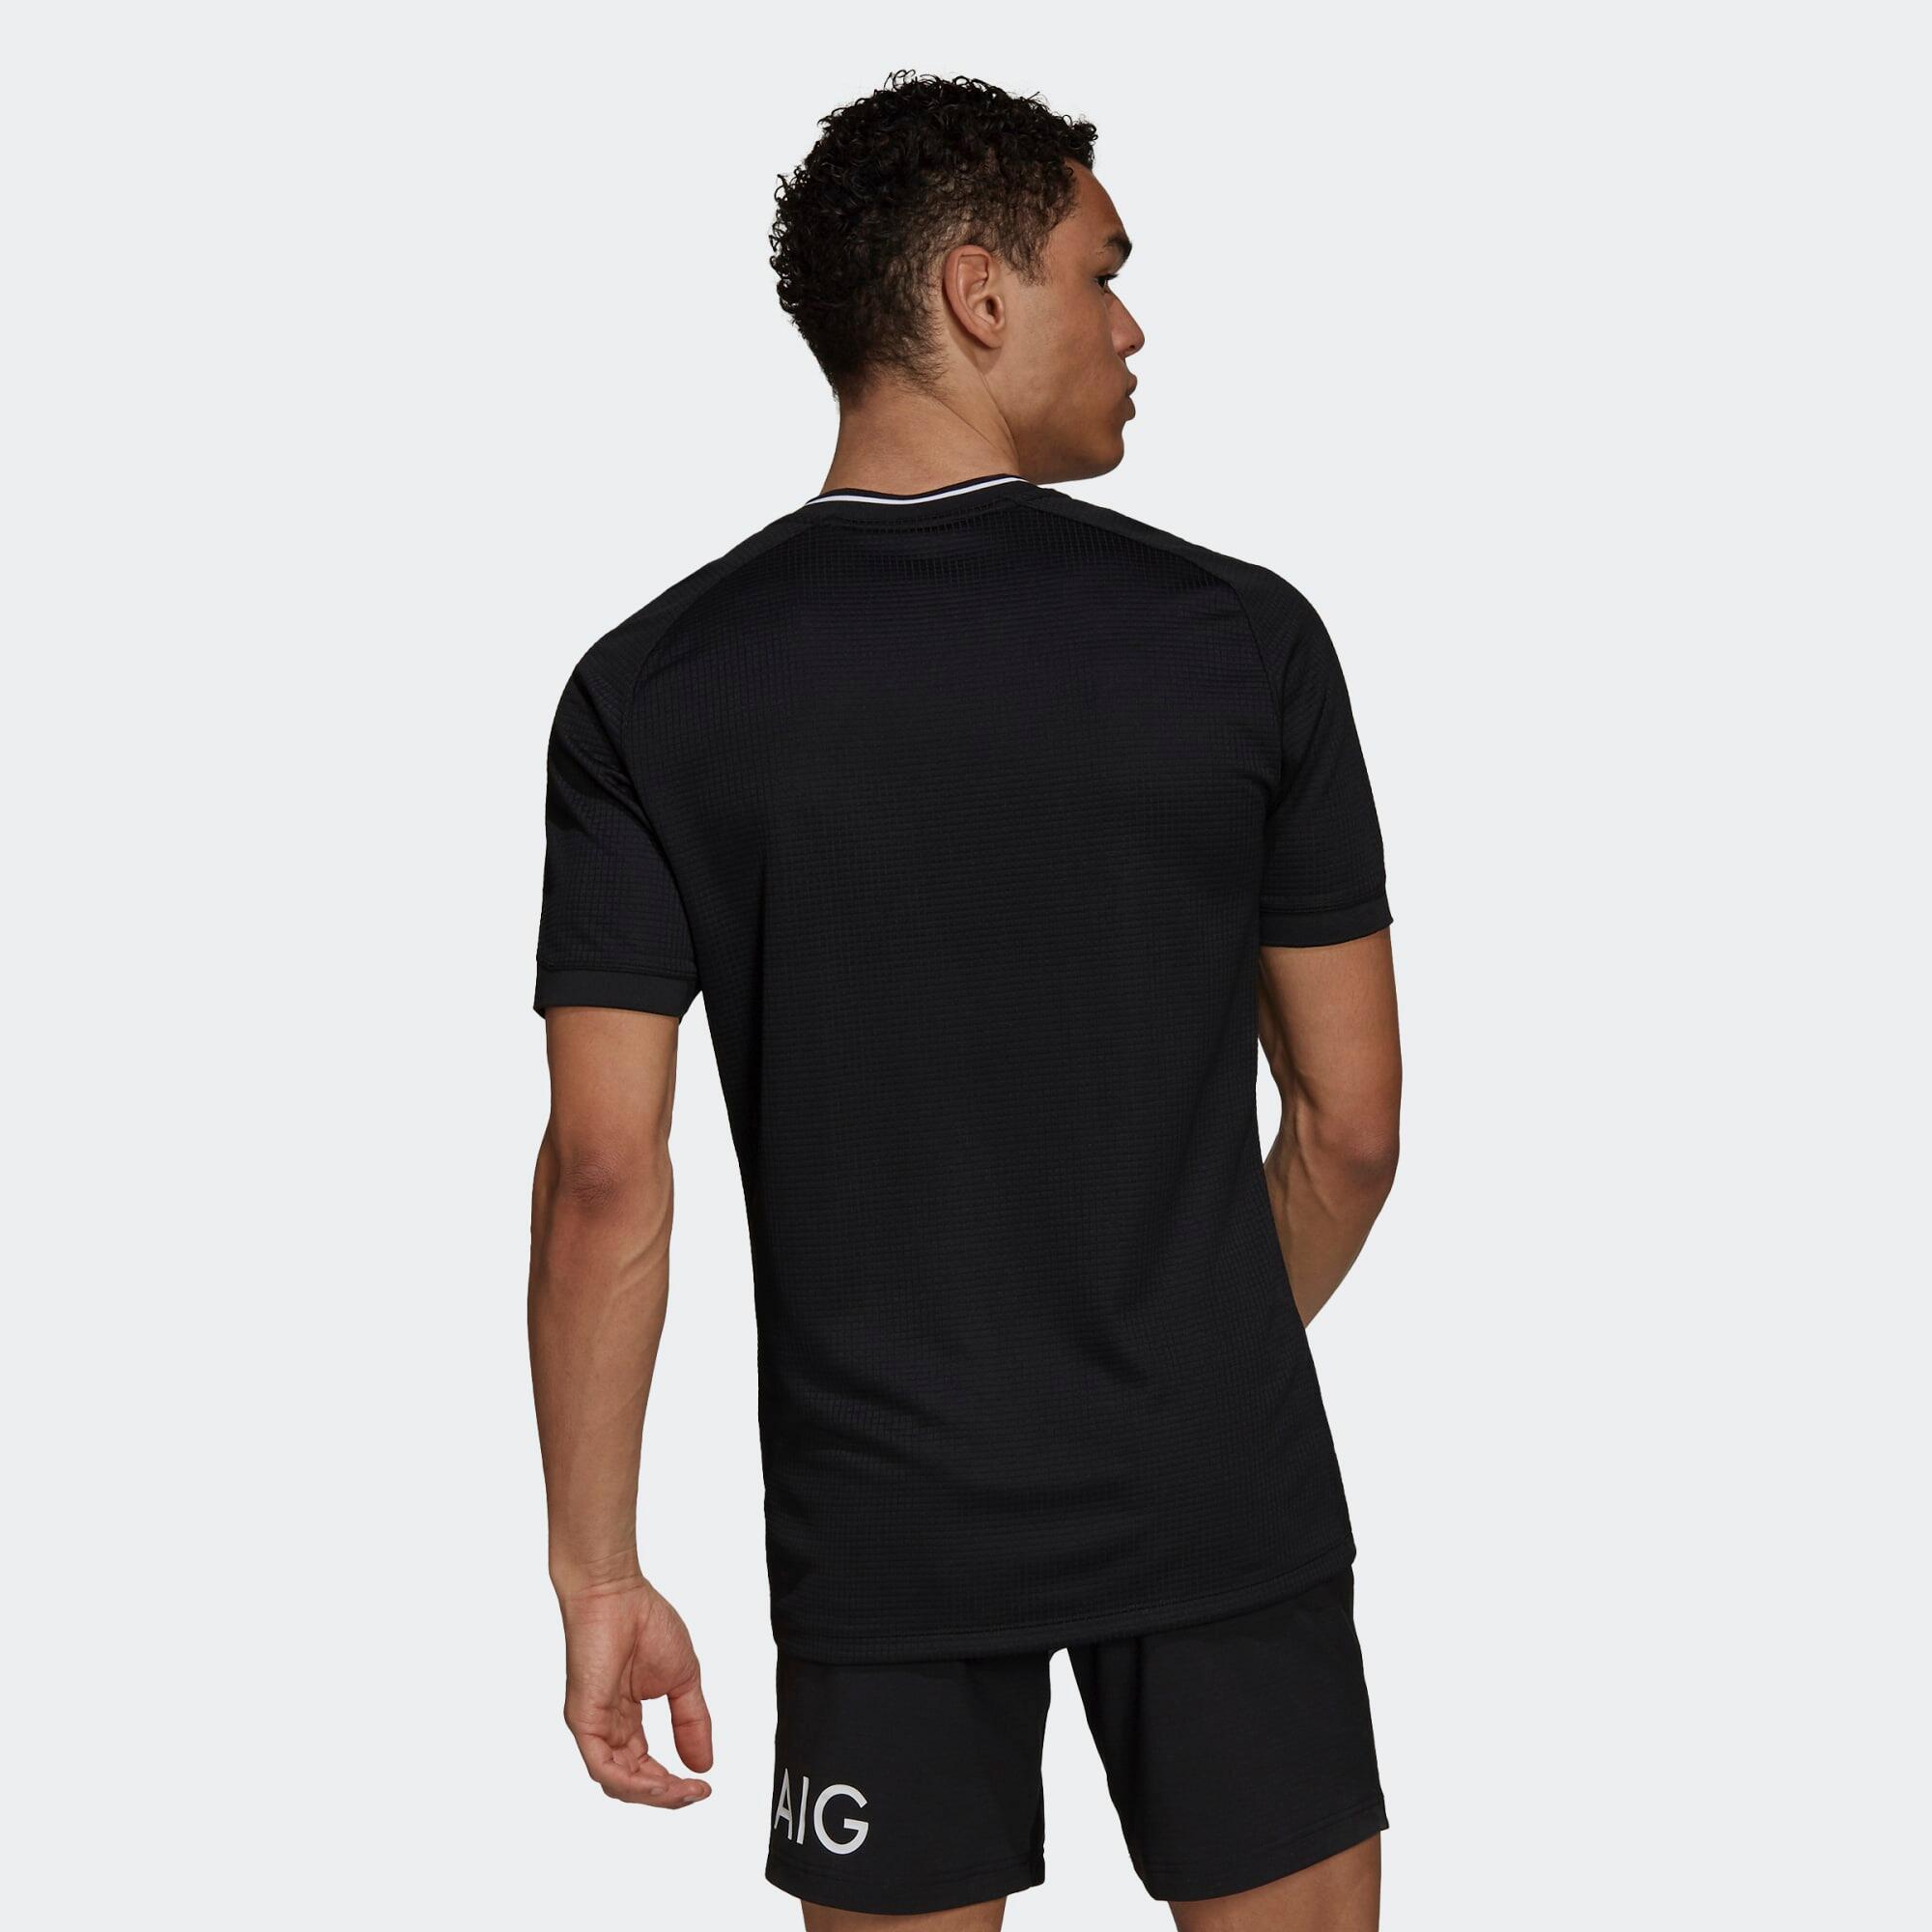 adidas New Zealand All Blacks Home Rugby Shirt Adults GU1915 Black 4/5